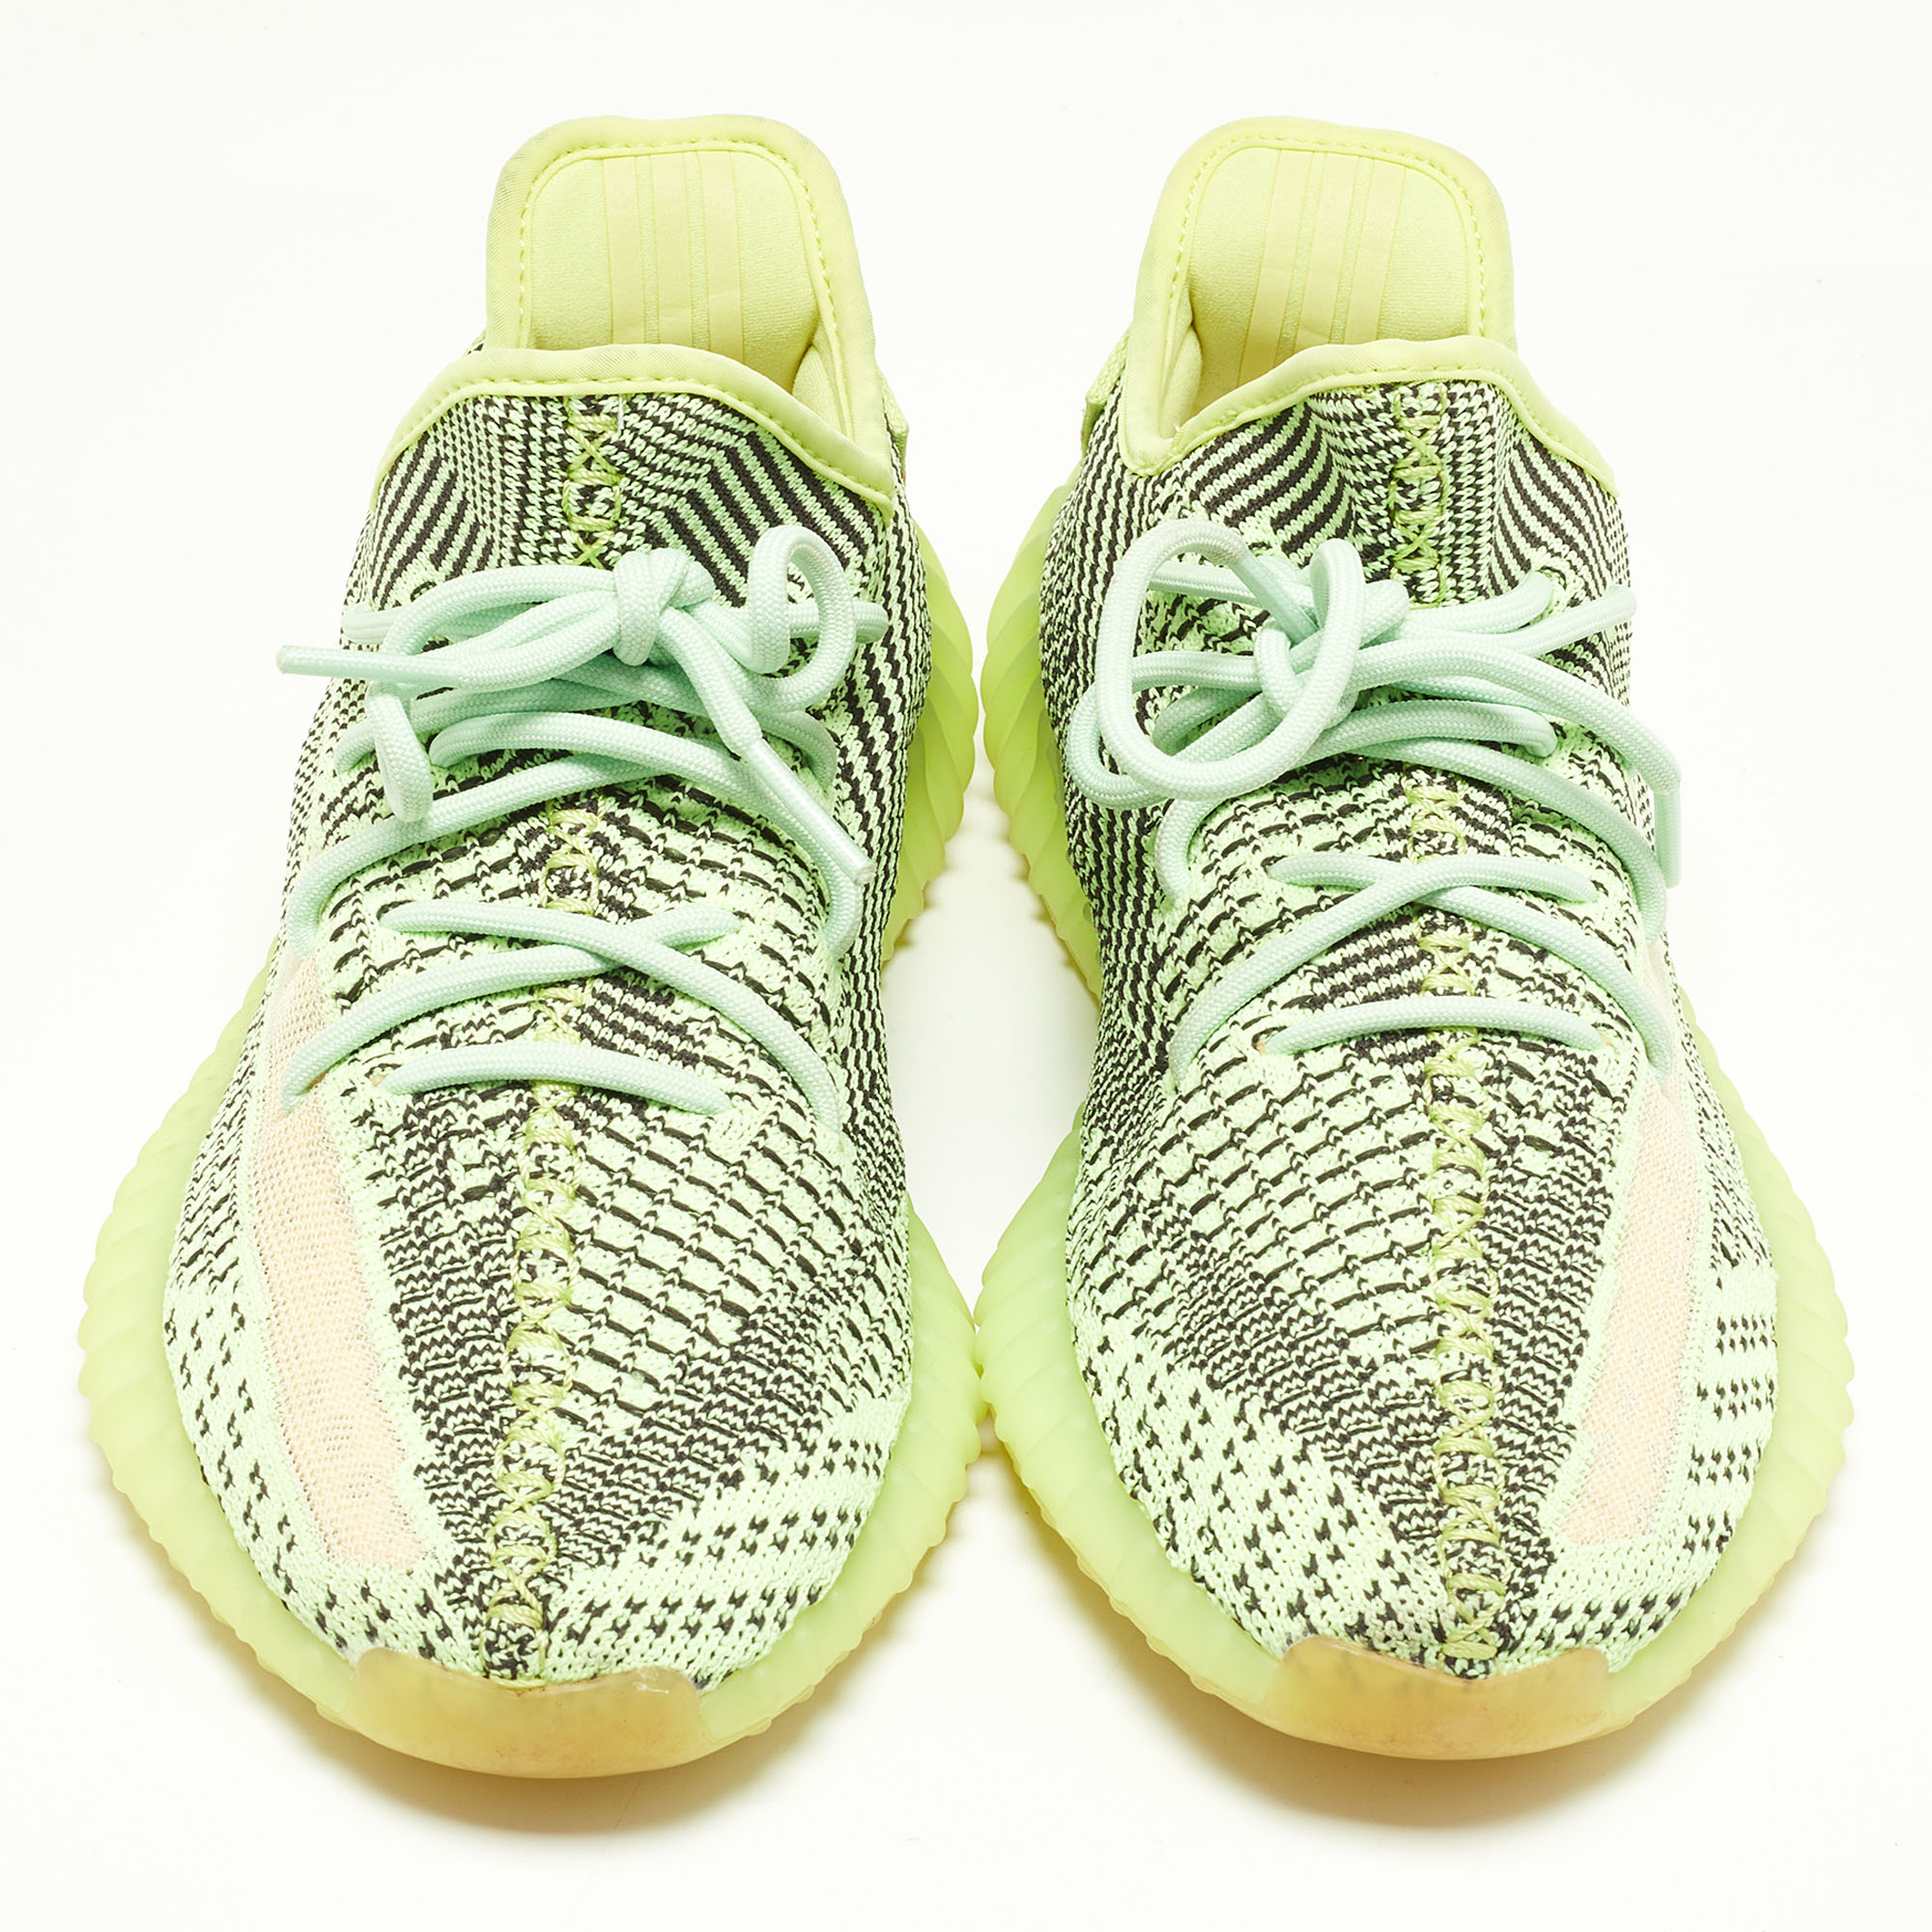 Yeezy X Adidas Green Knit Fabric Boost 350 V2 Yeezreel Sneakers Size 43 1/3